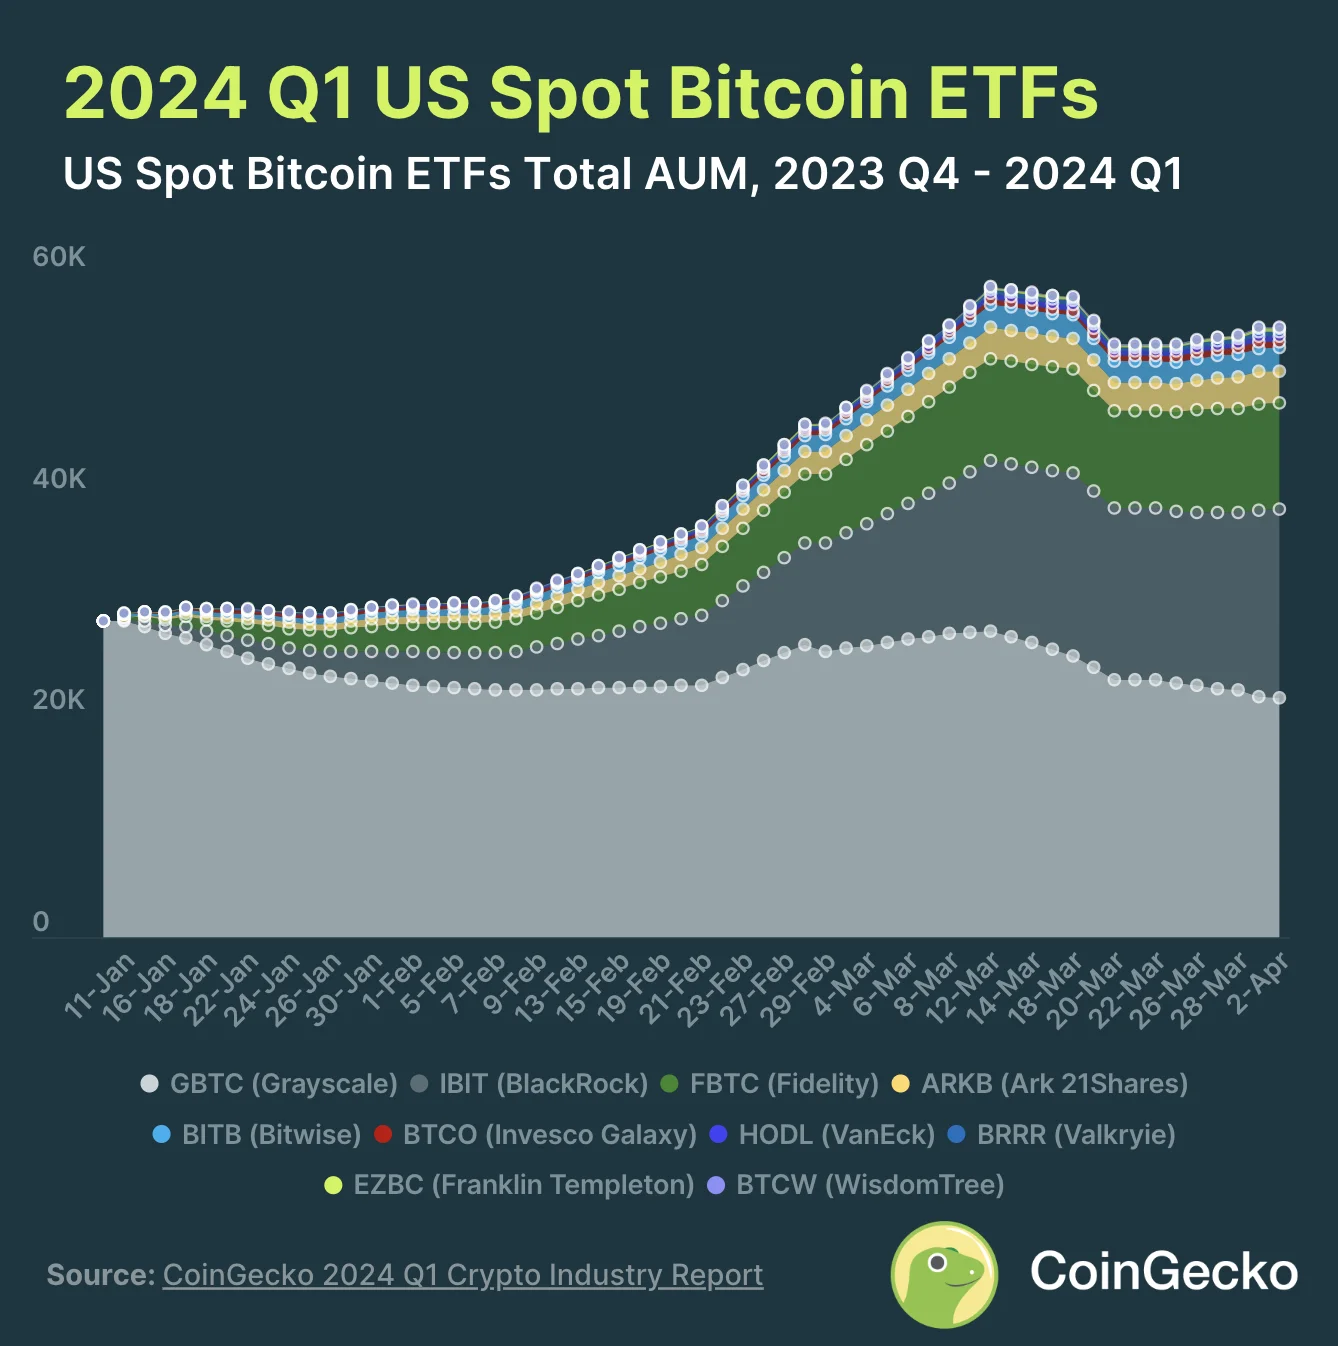 2. The US Spot Bitcoin ETFs Held +$55.1B in AUM